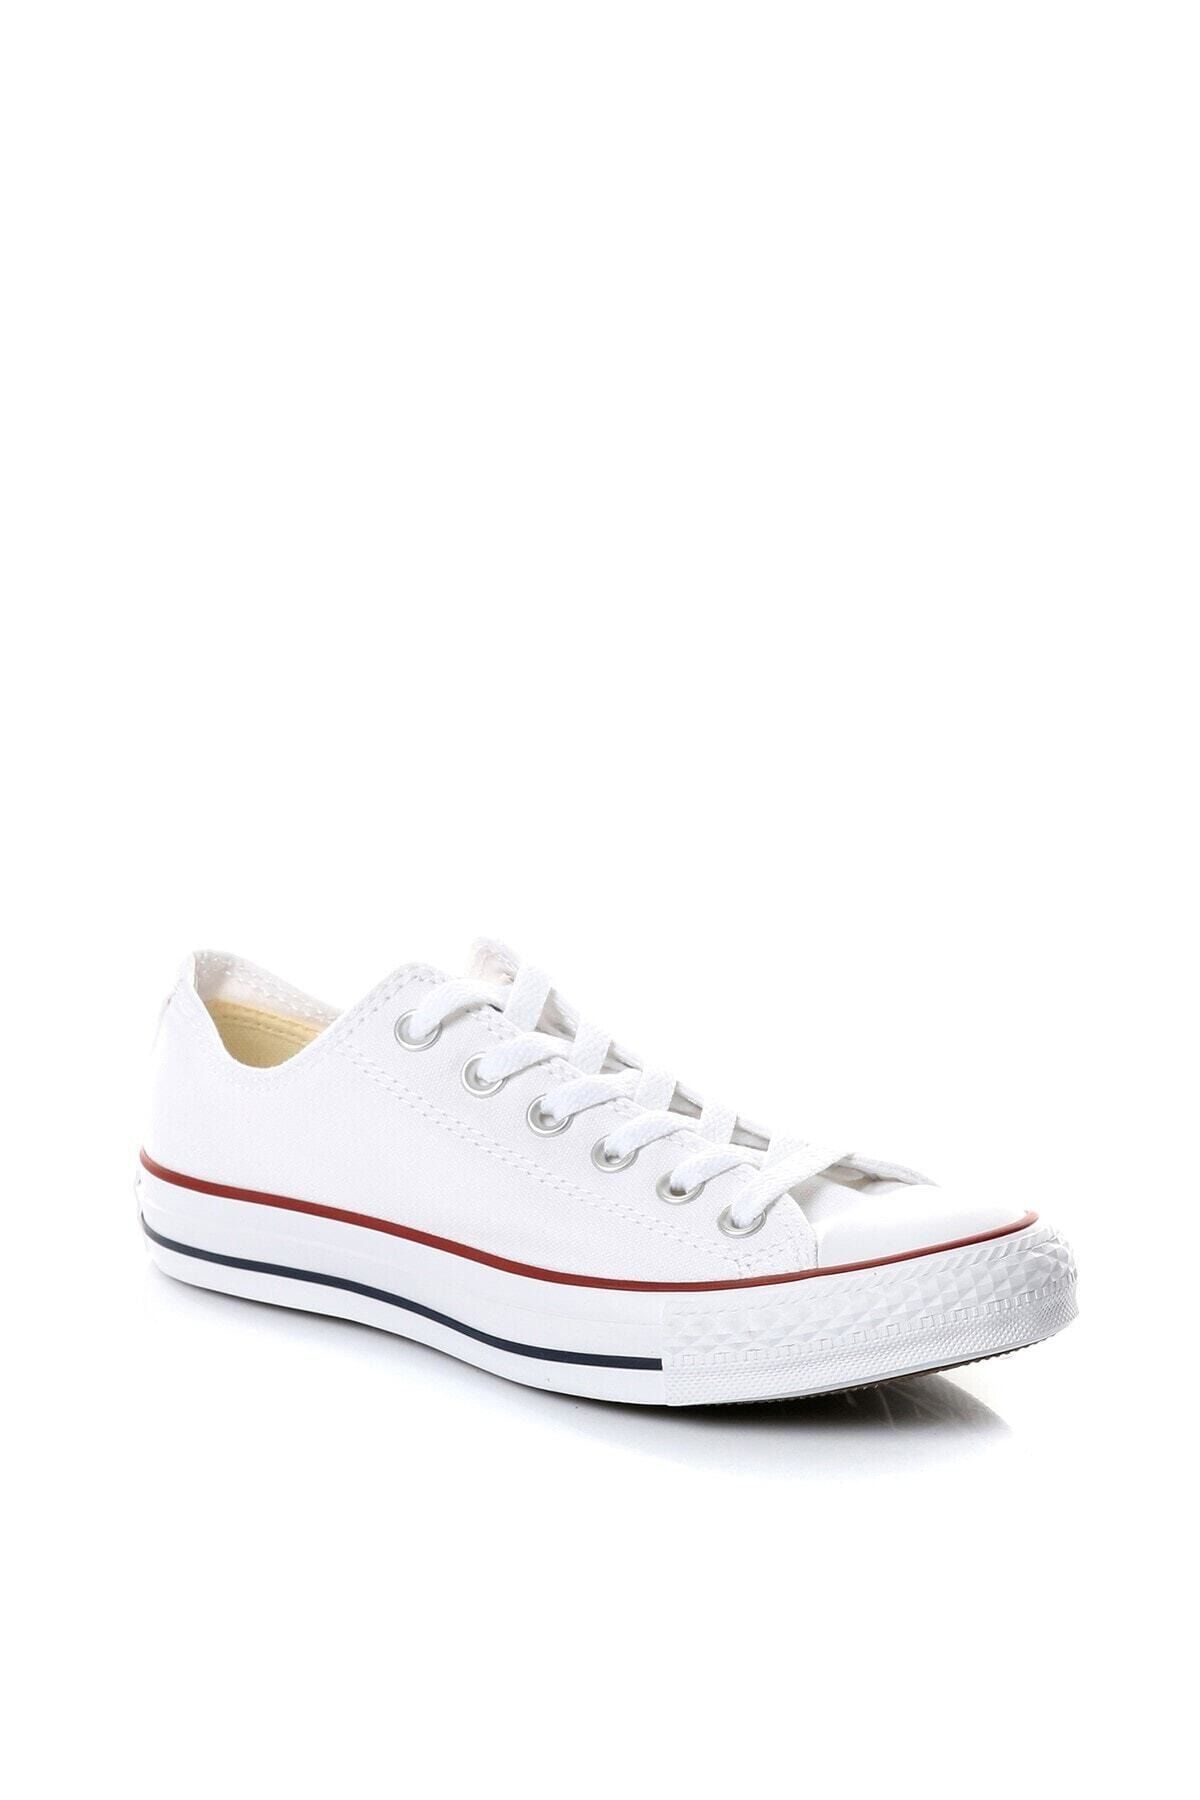 Converse Kadın  Beyaz Sneaker M7652c Chuck Taylor All Star Optıcal White Canvas